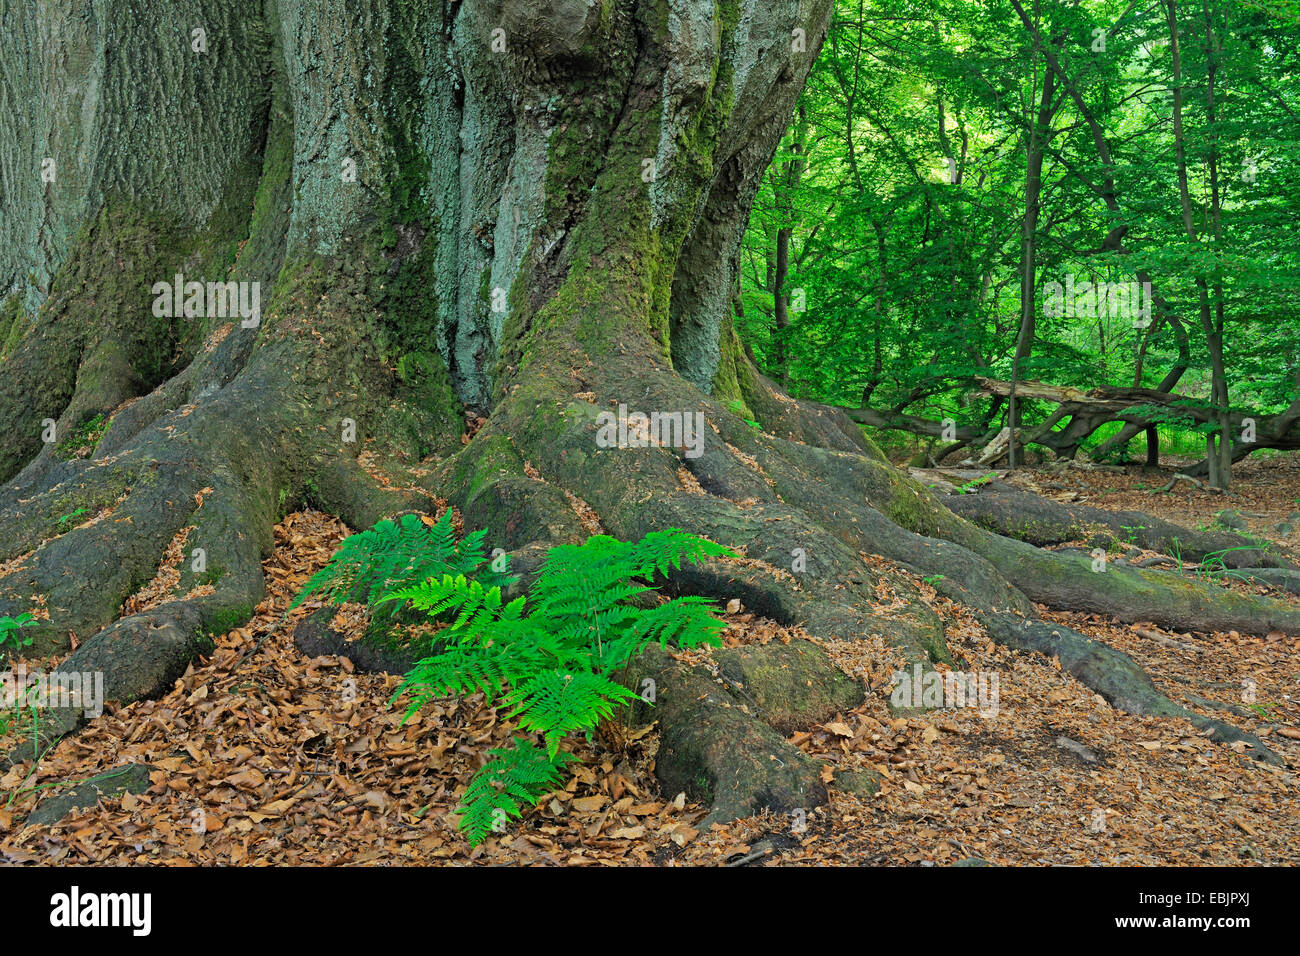 broad buckler-fern (Dryopteris dilatata), fern growing between mossy roots of old beech tree, Germany, Hesse, Urwald Sababurg, Reinhardswald Stock Photo